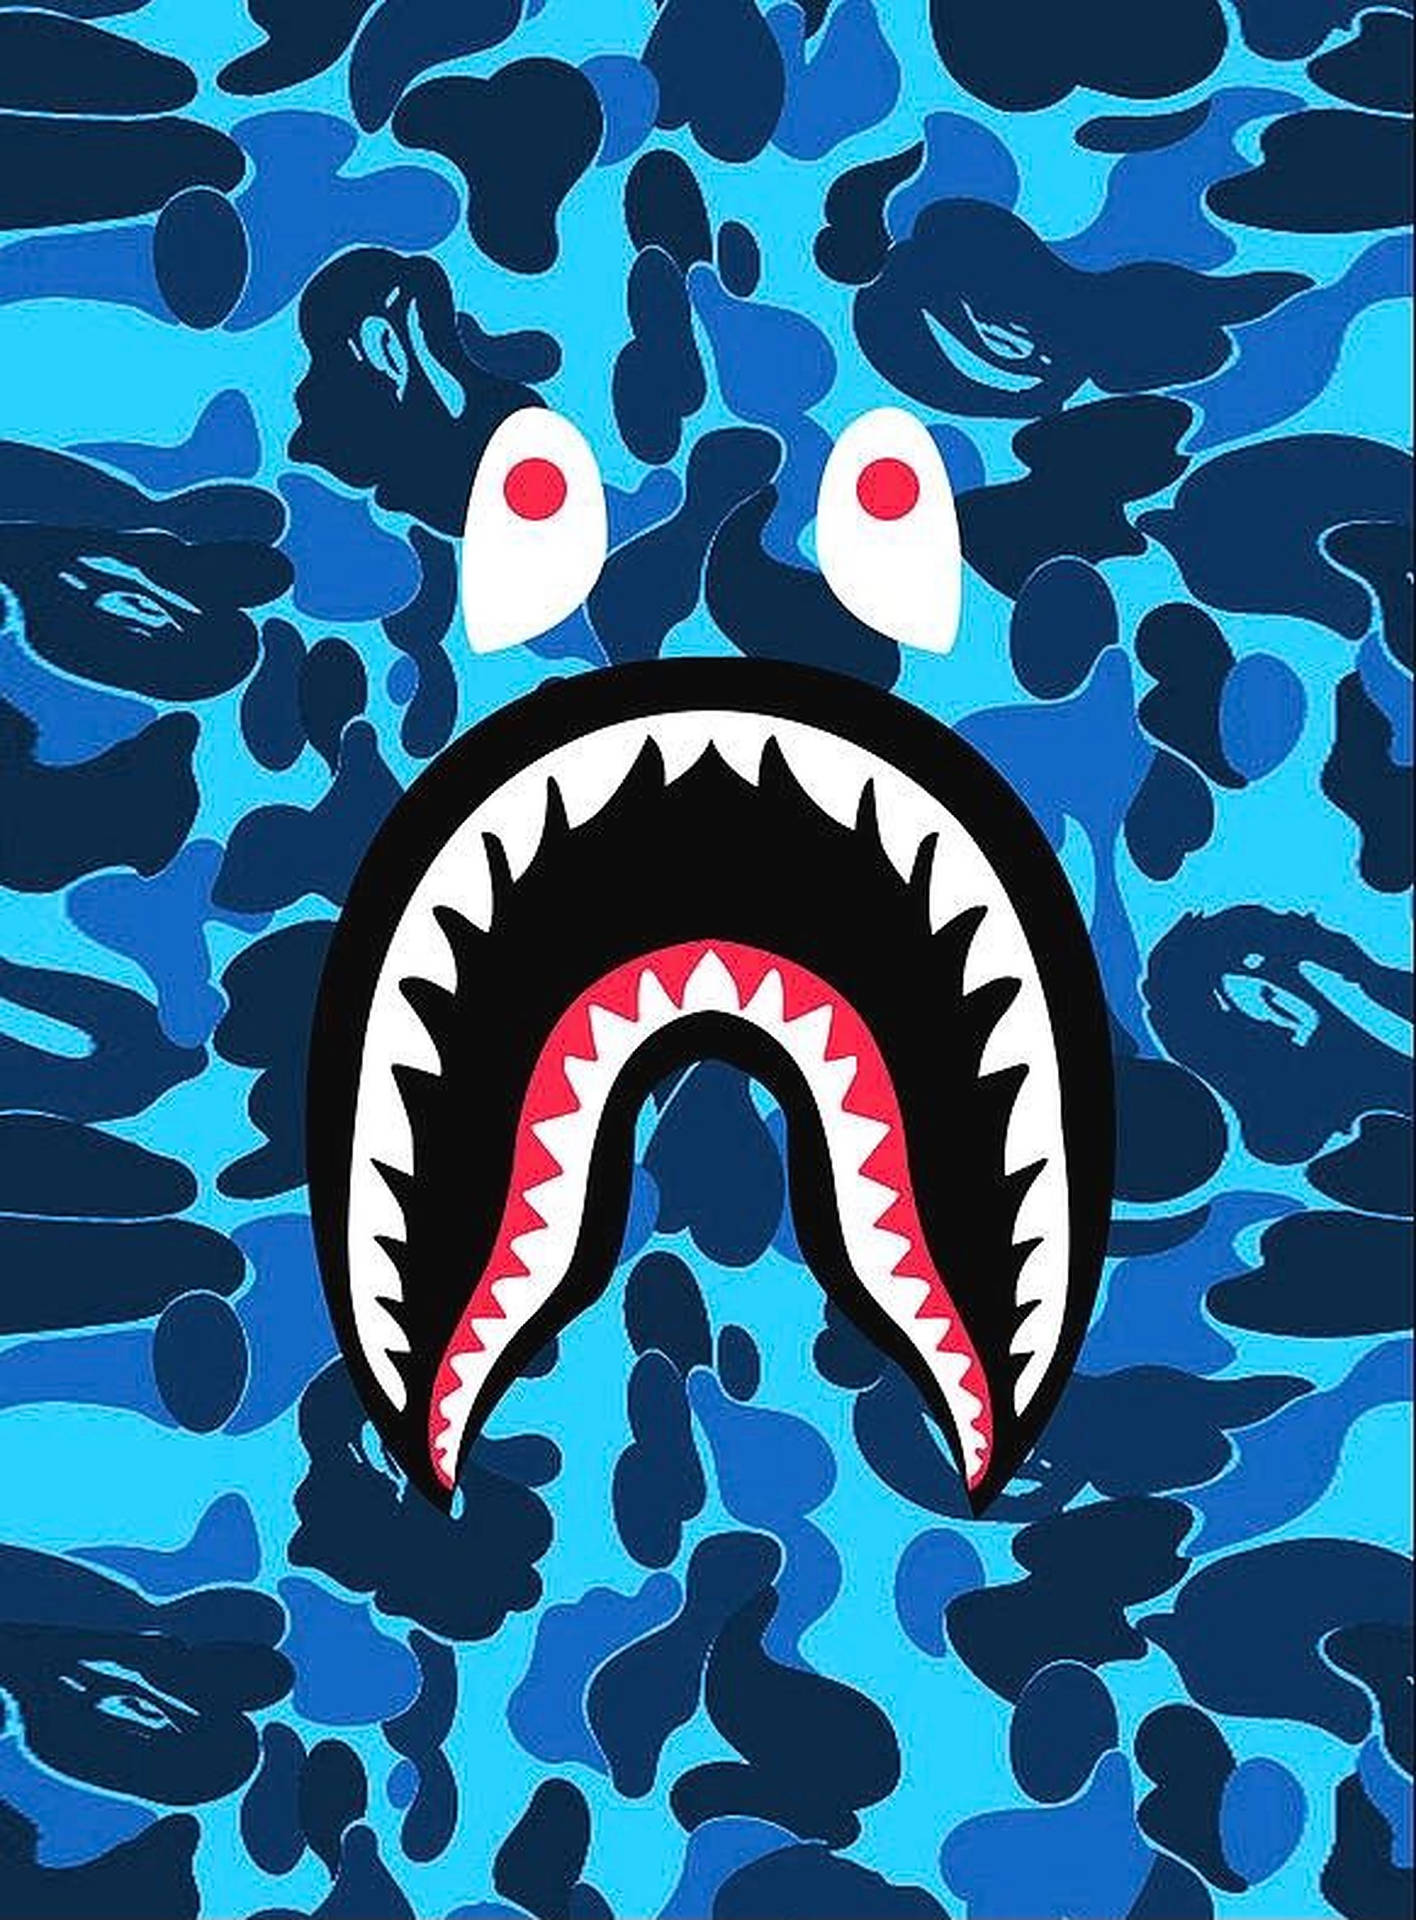 Download BAPE Shark Supreme Logo Wallpaper